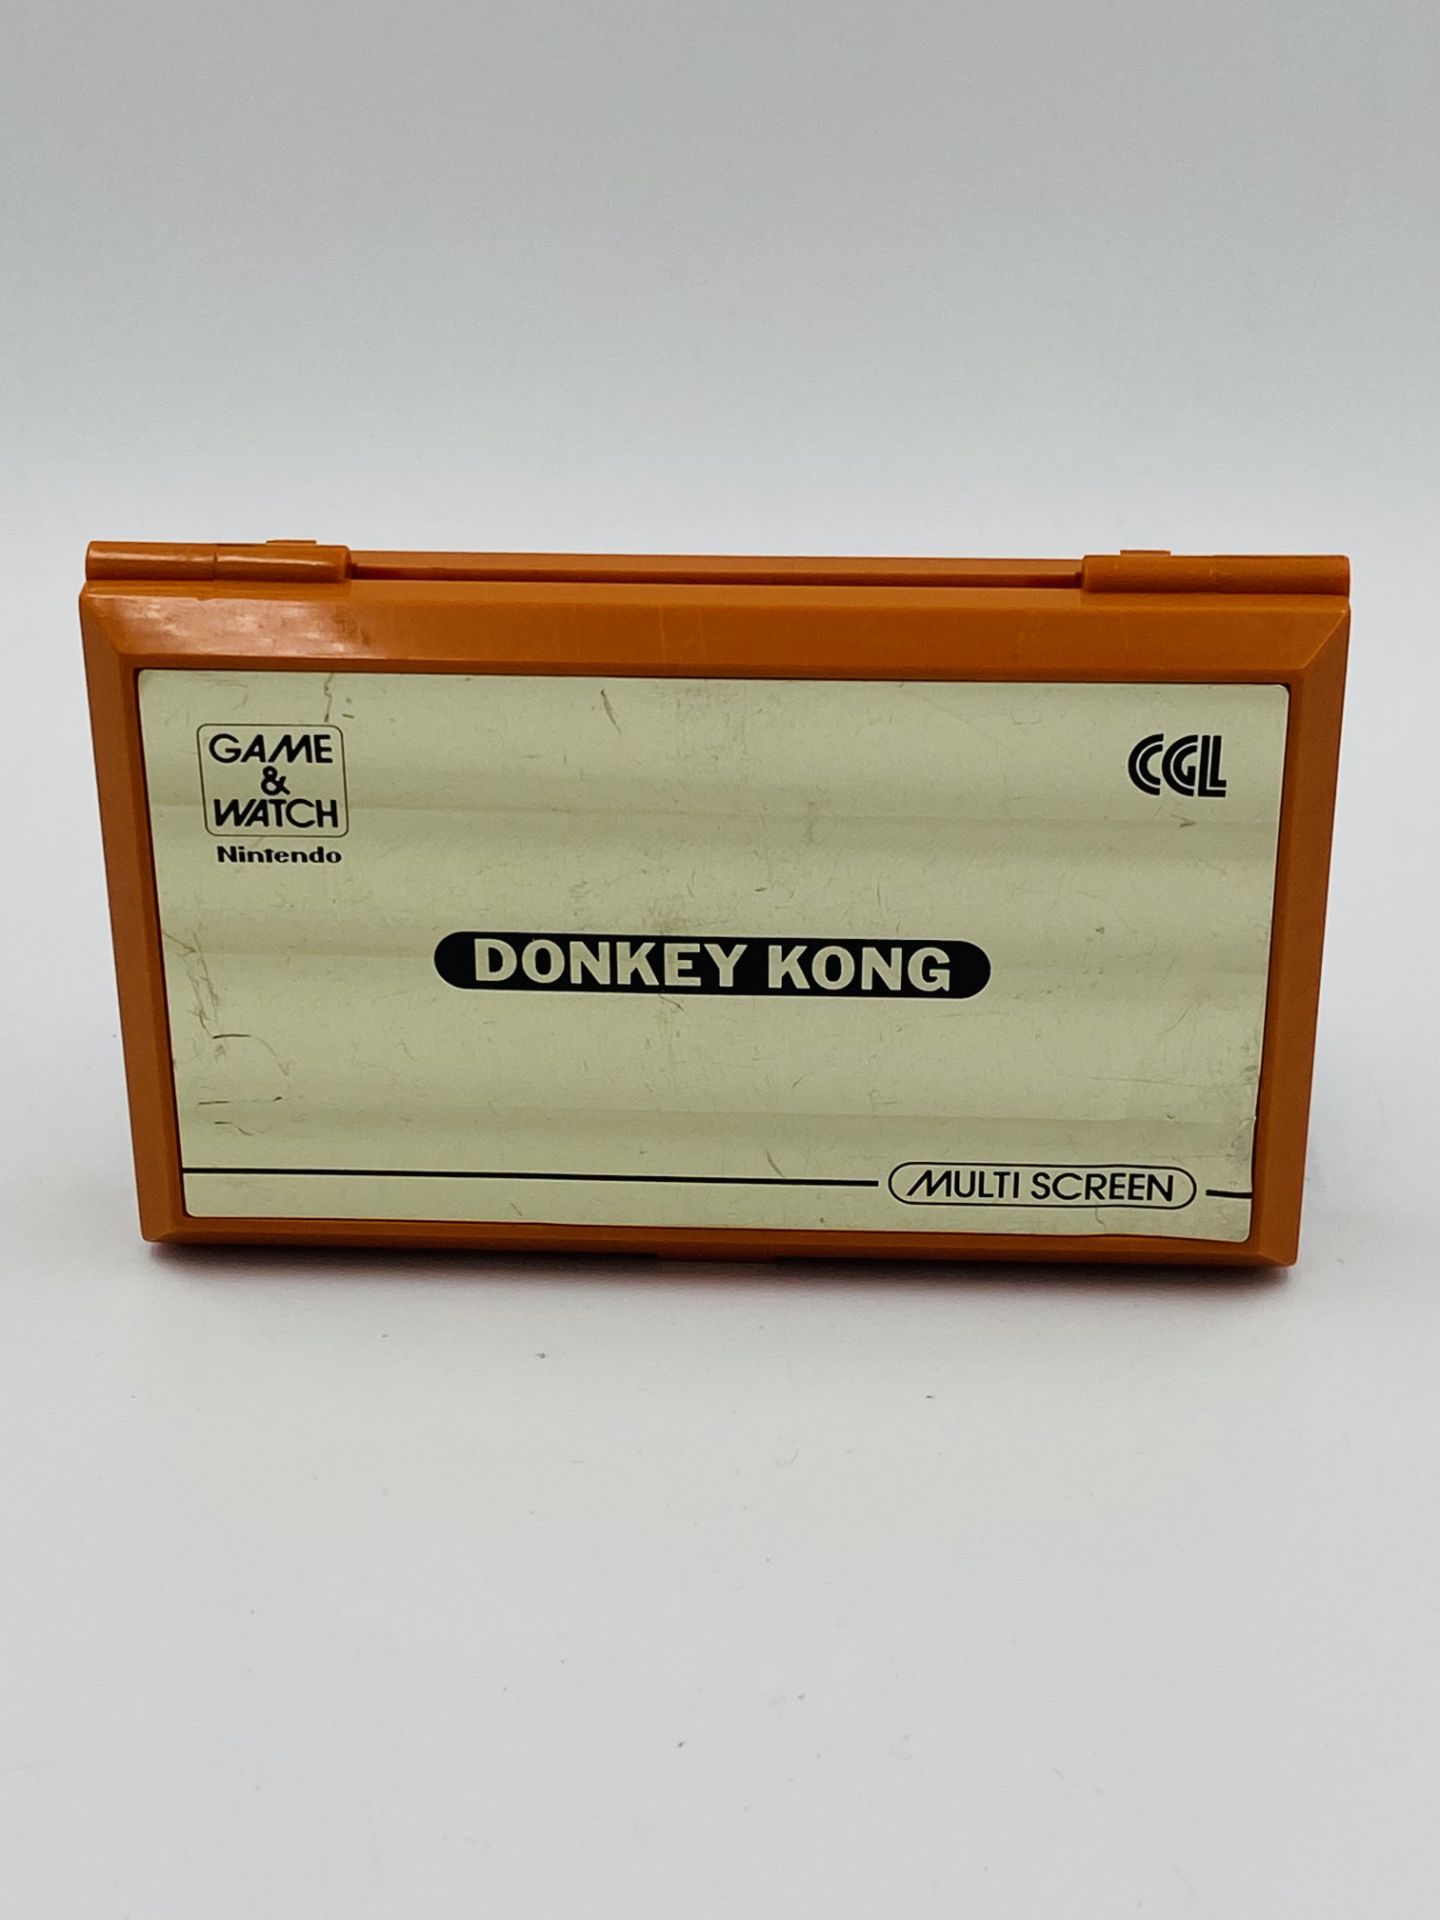 Nintendo Game & Watch Donkey Kong, model DK-52